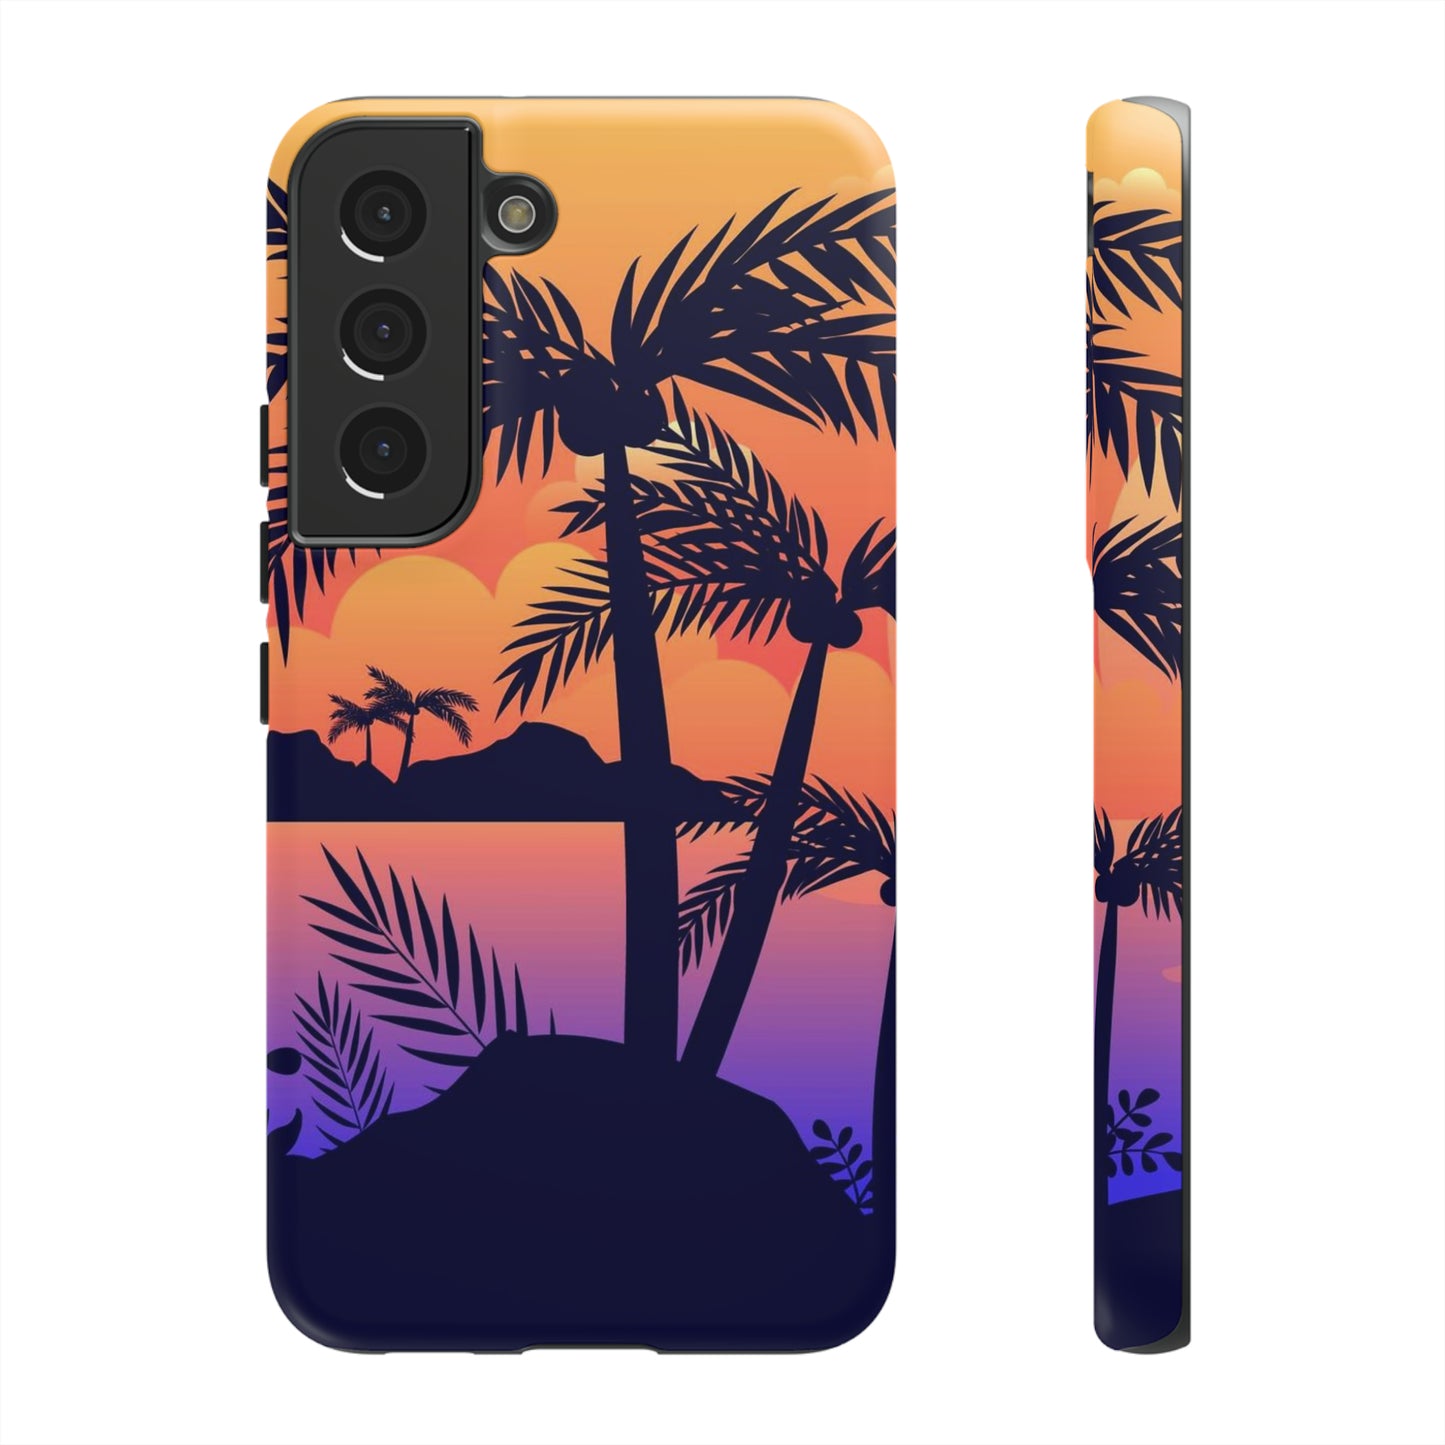 Black sunset palm Samsung phone case